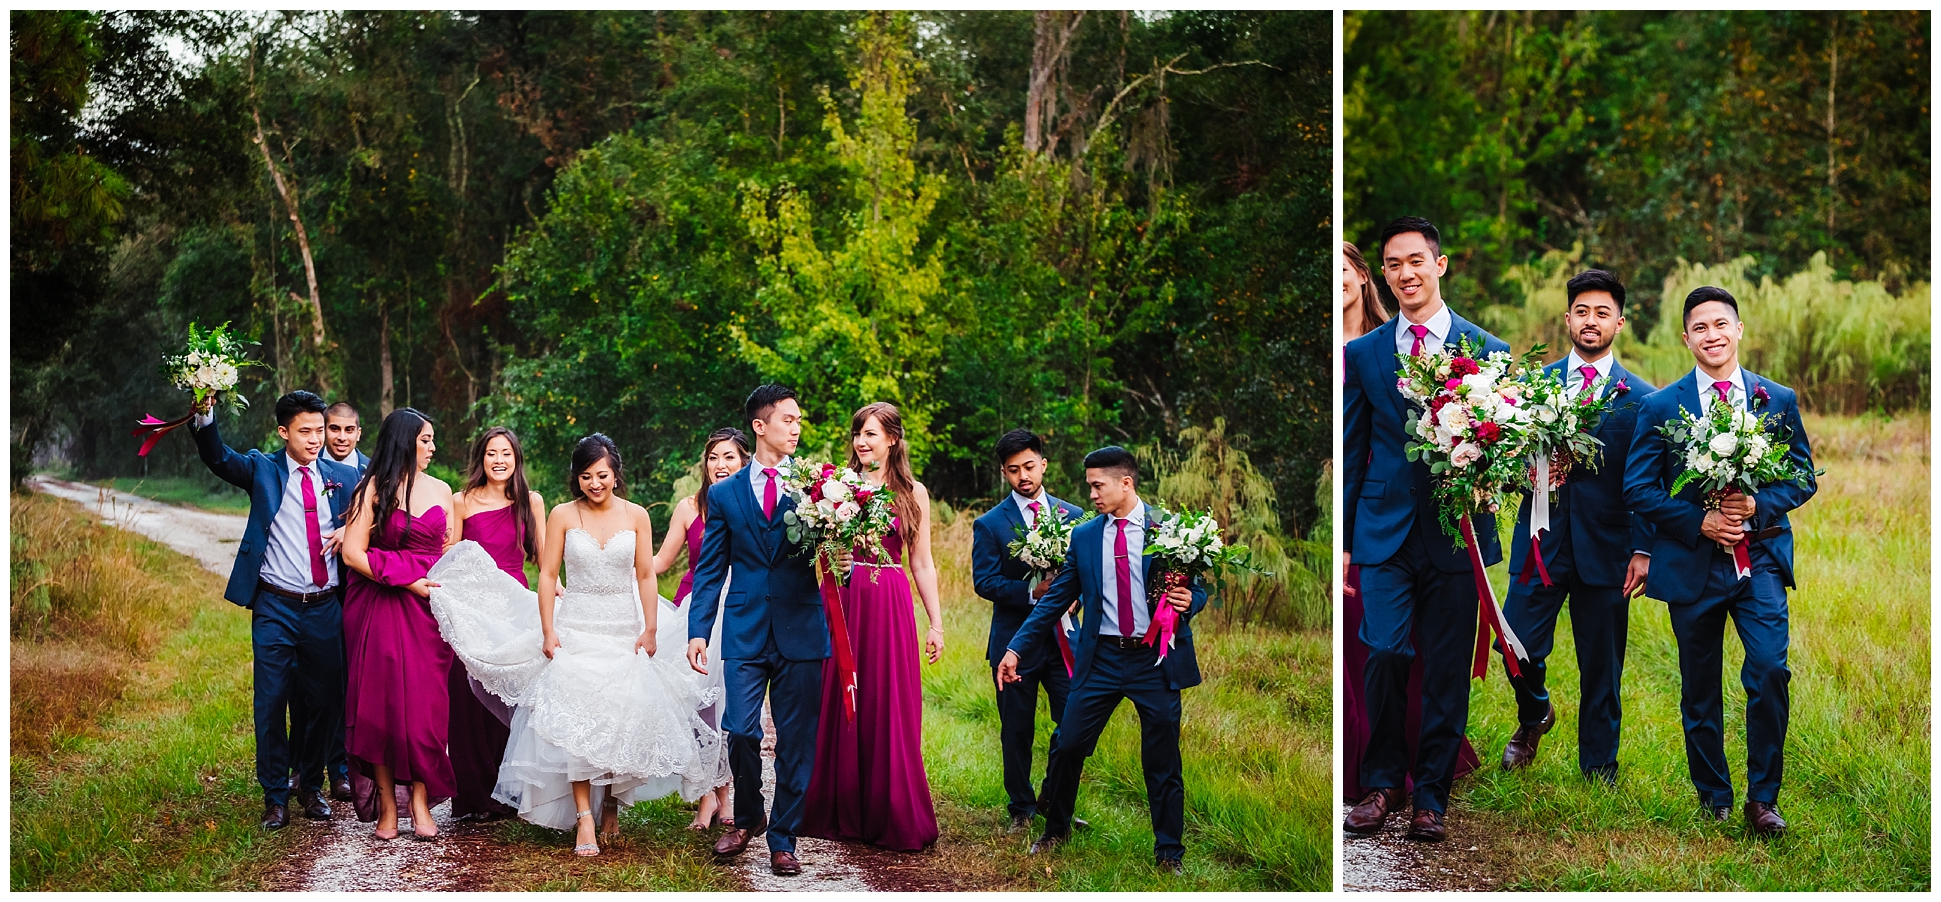 tampa-wedding-photographer-philipino-colorful-woods-ballroom-church-mass-confetti-fuscia_0056.jpg